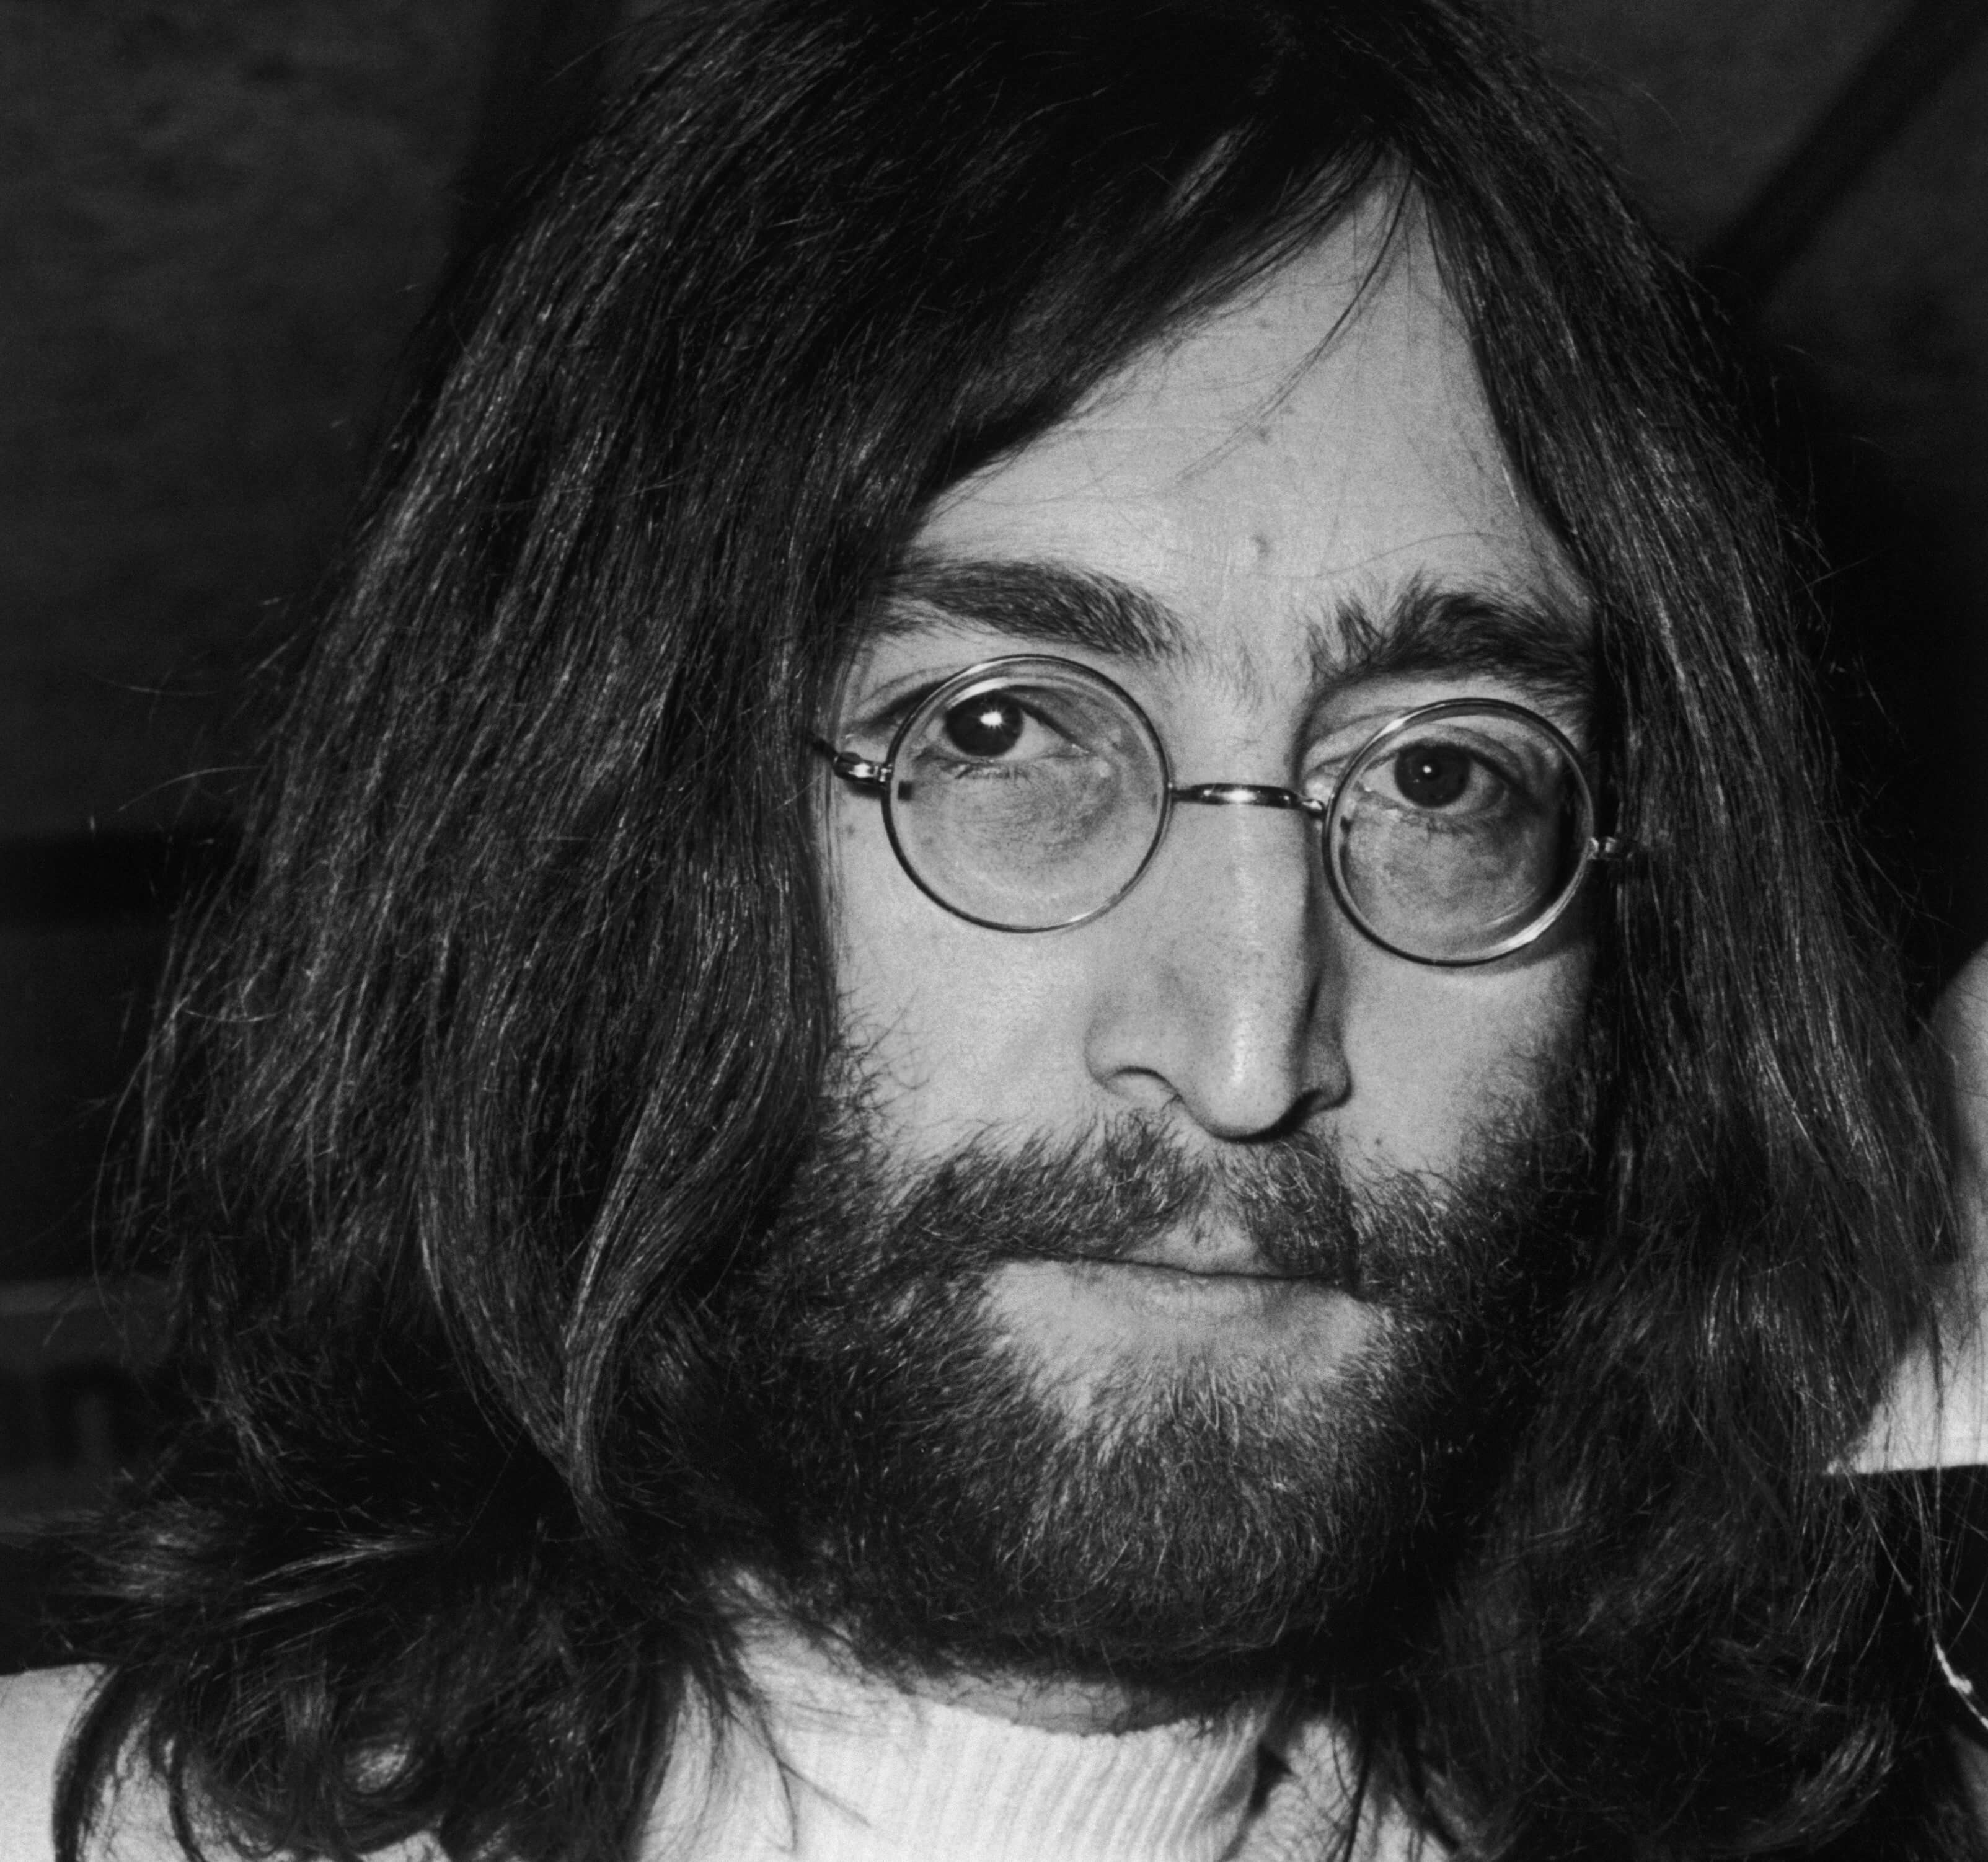 John Lennon with a beard during The Beatles' "Tomorrow Never Knows" era